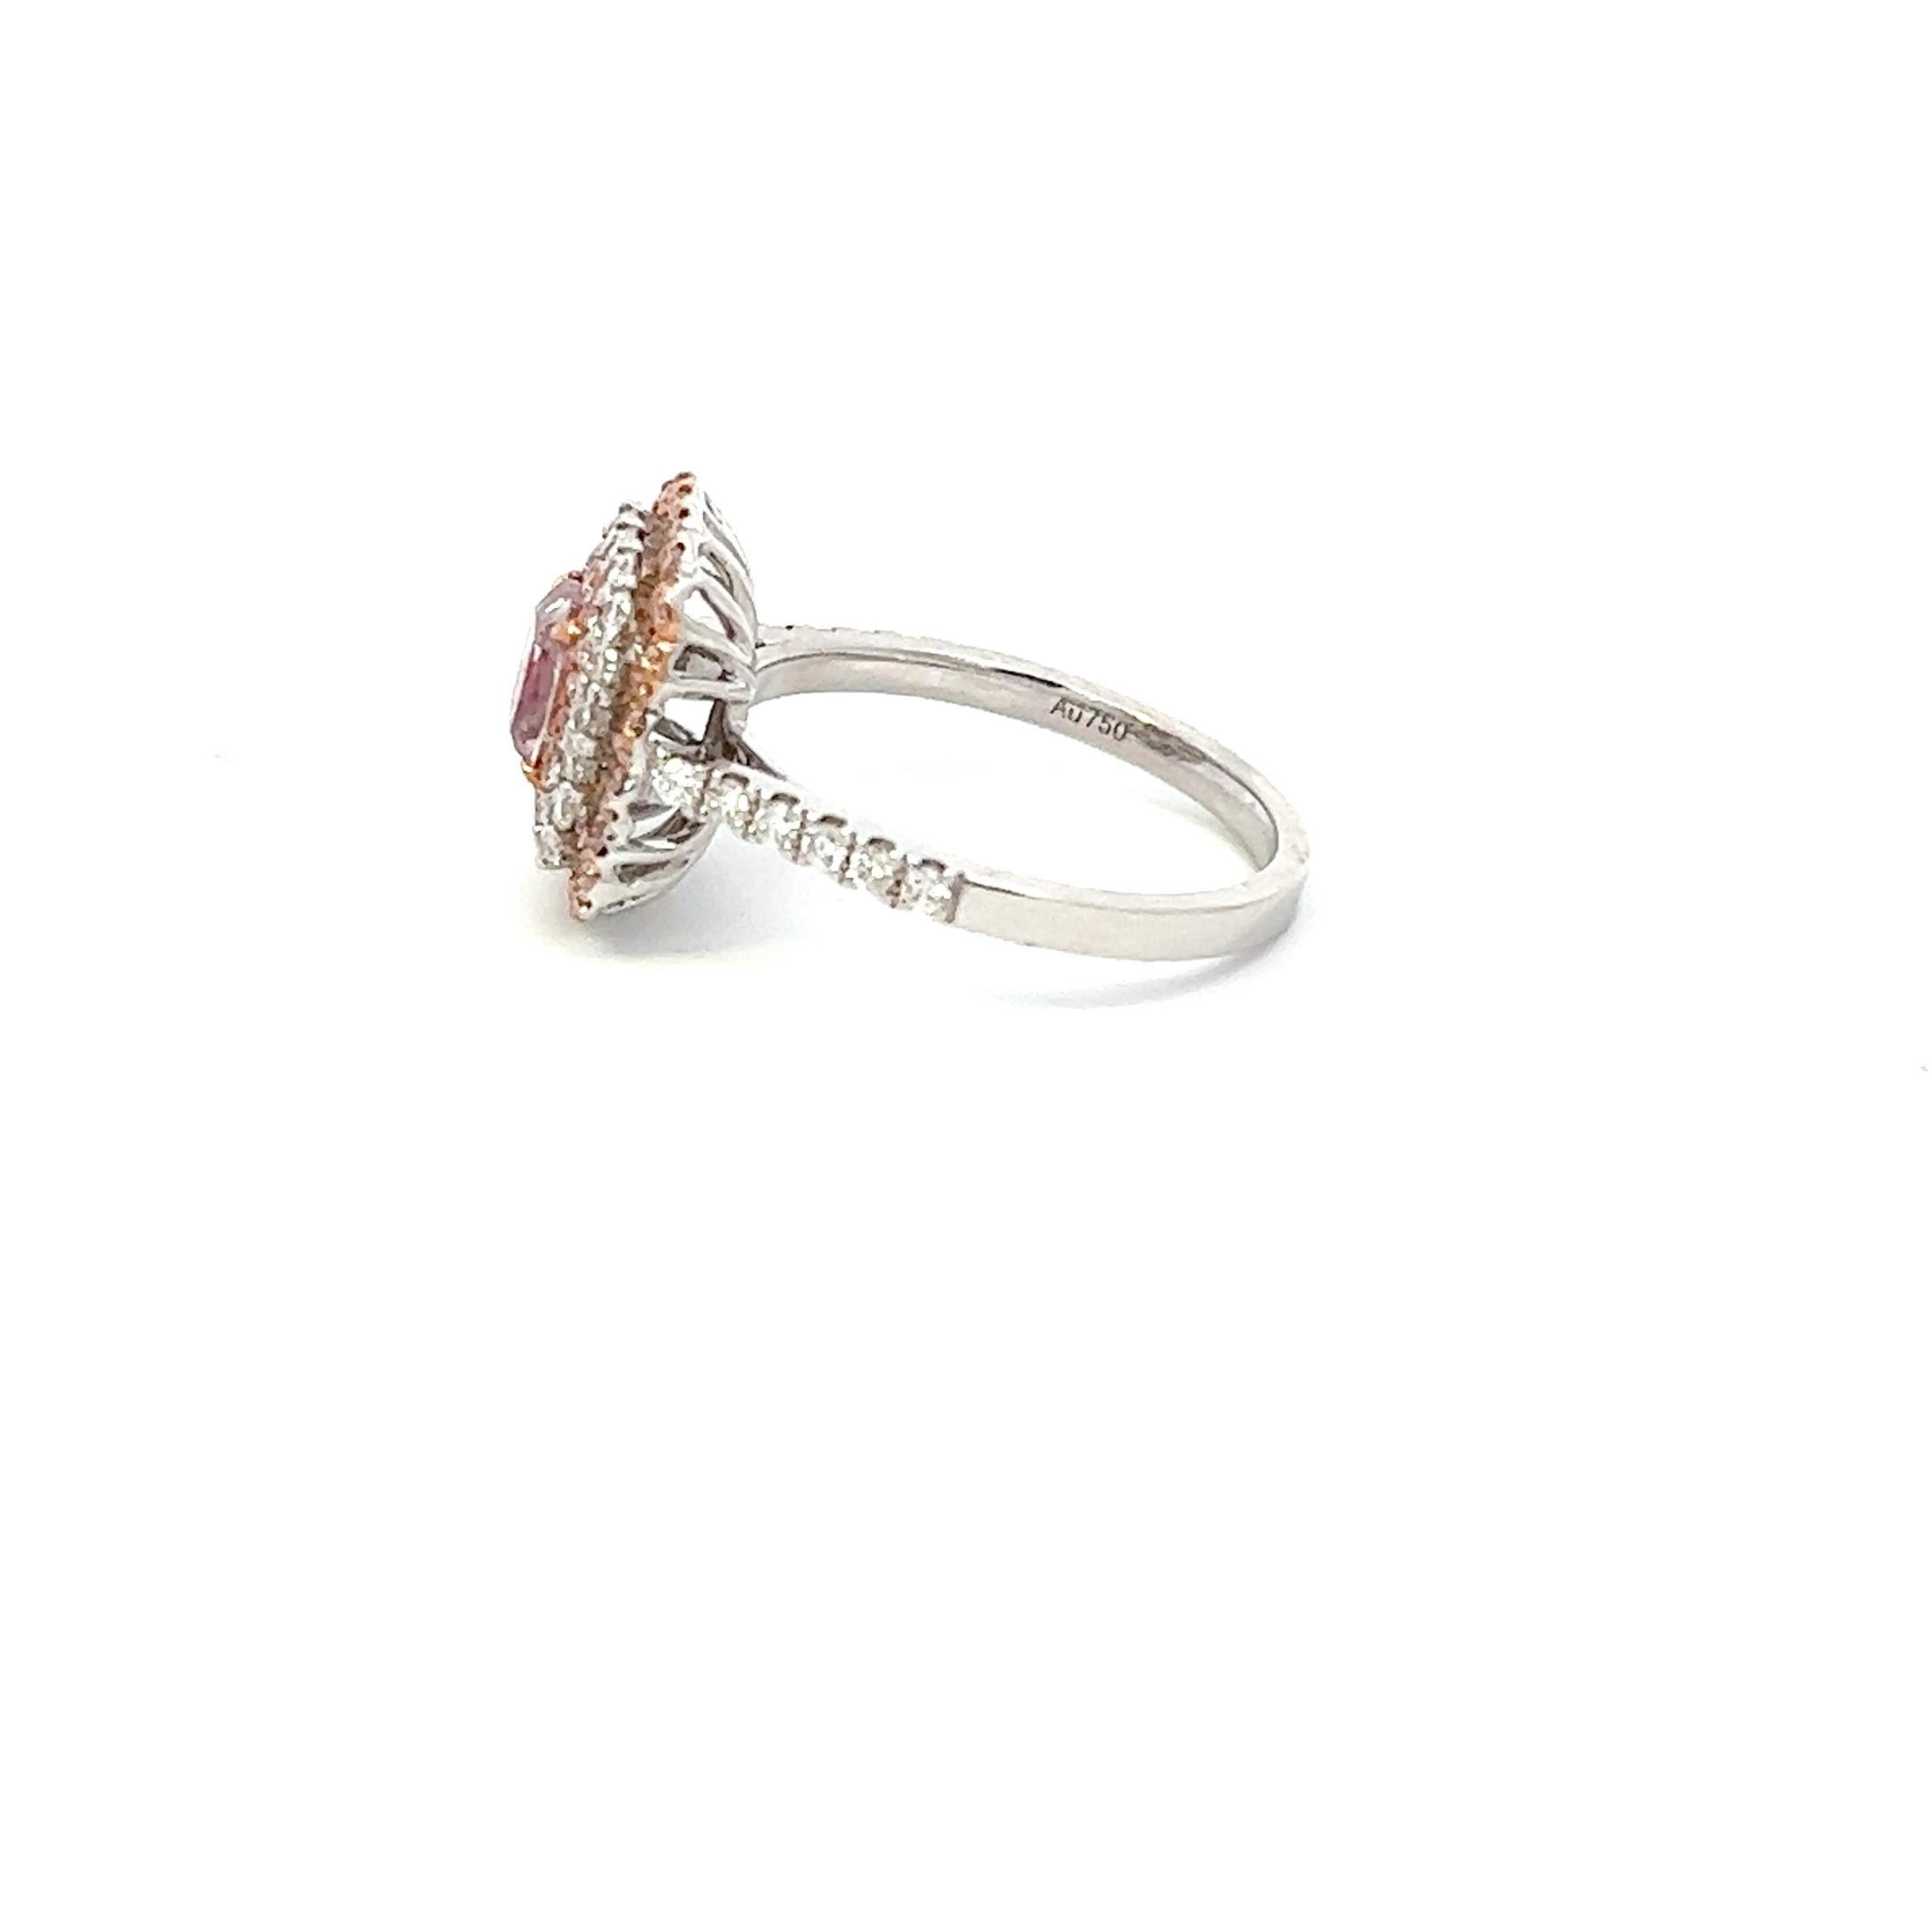 Cushion Cut GIA Certified 1.01 Carat Purplish Pink Diamond Ring For Sale